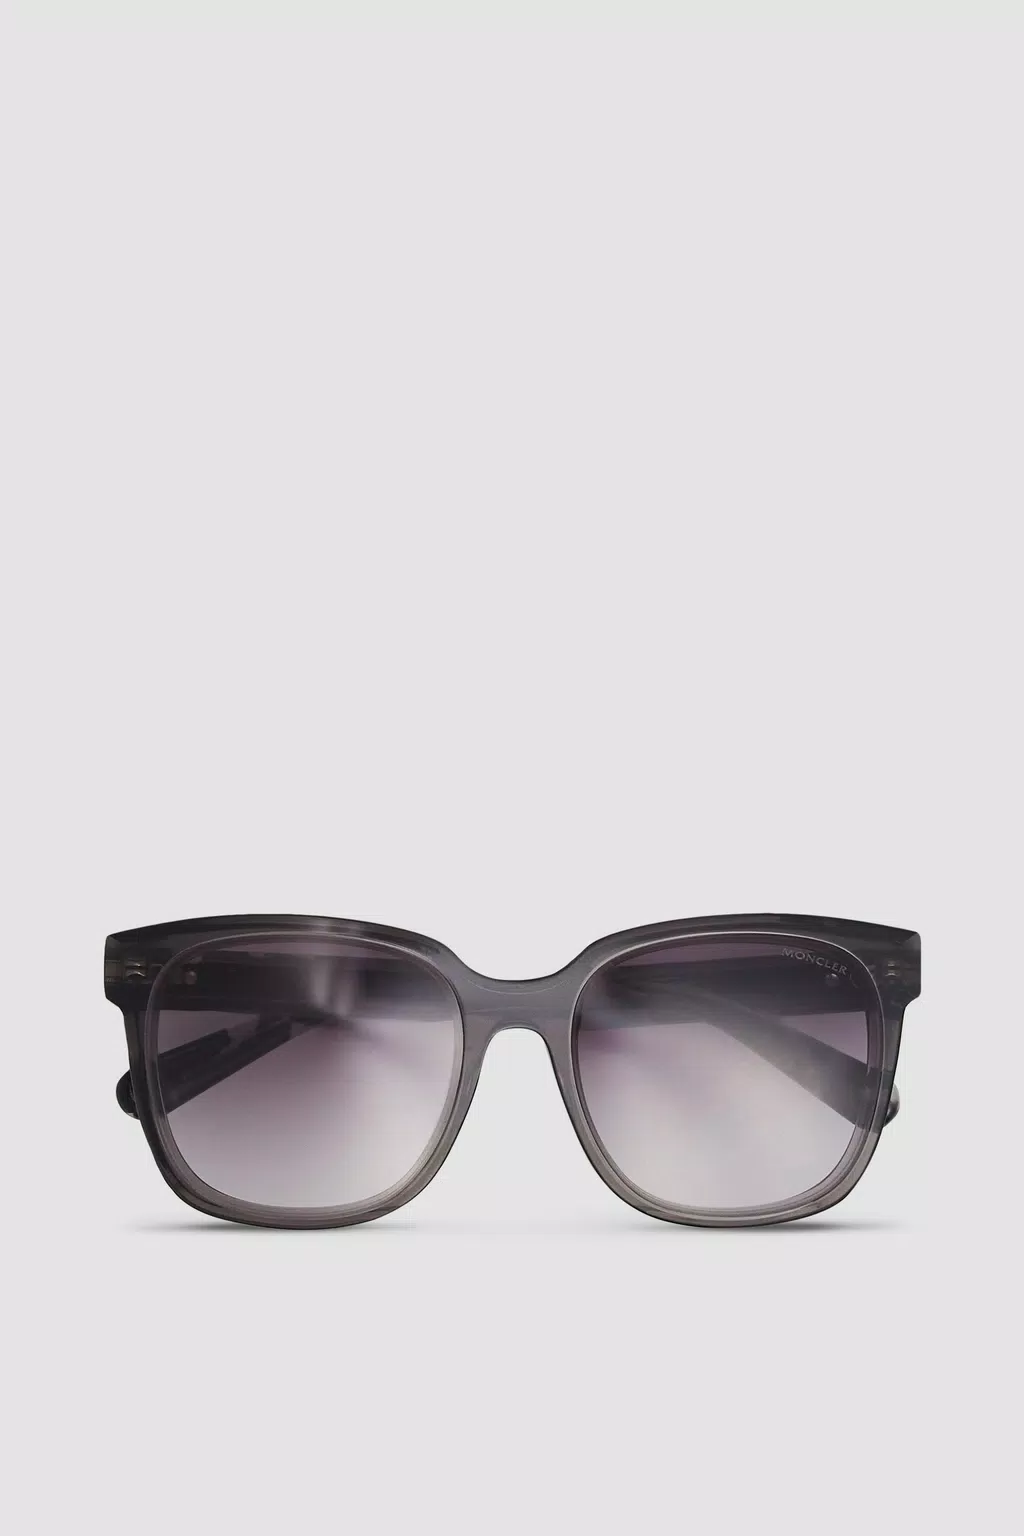 Biobeam Squared Sunglasses Women Black Moncler 1